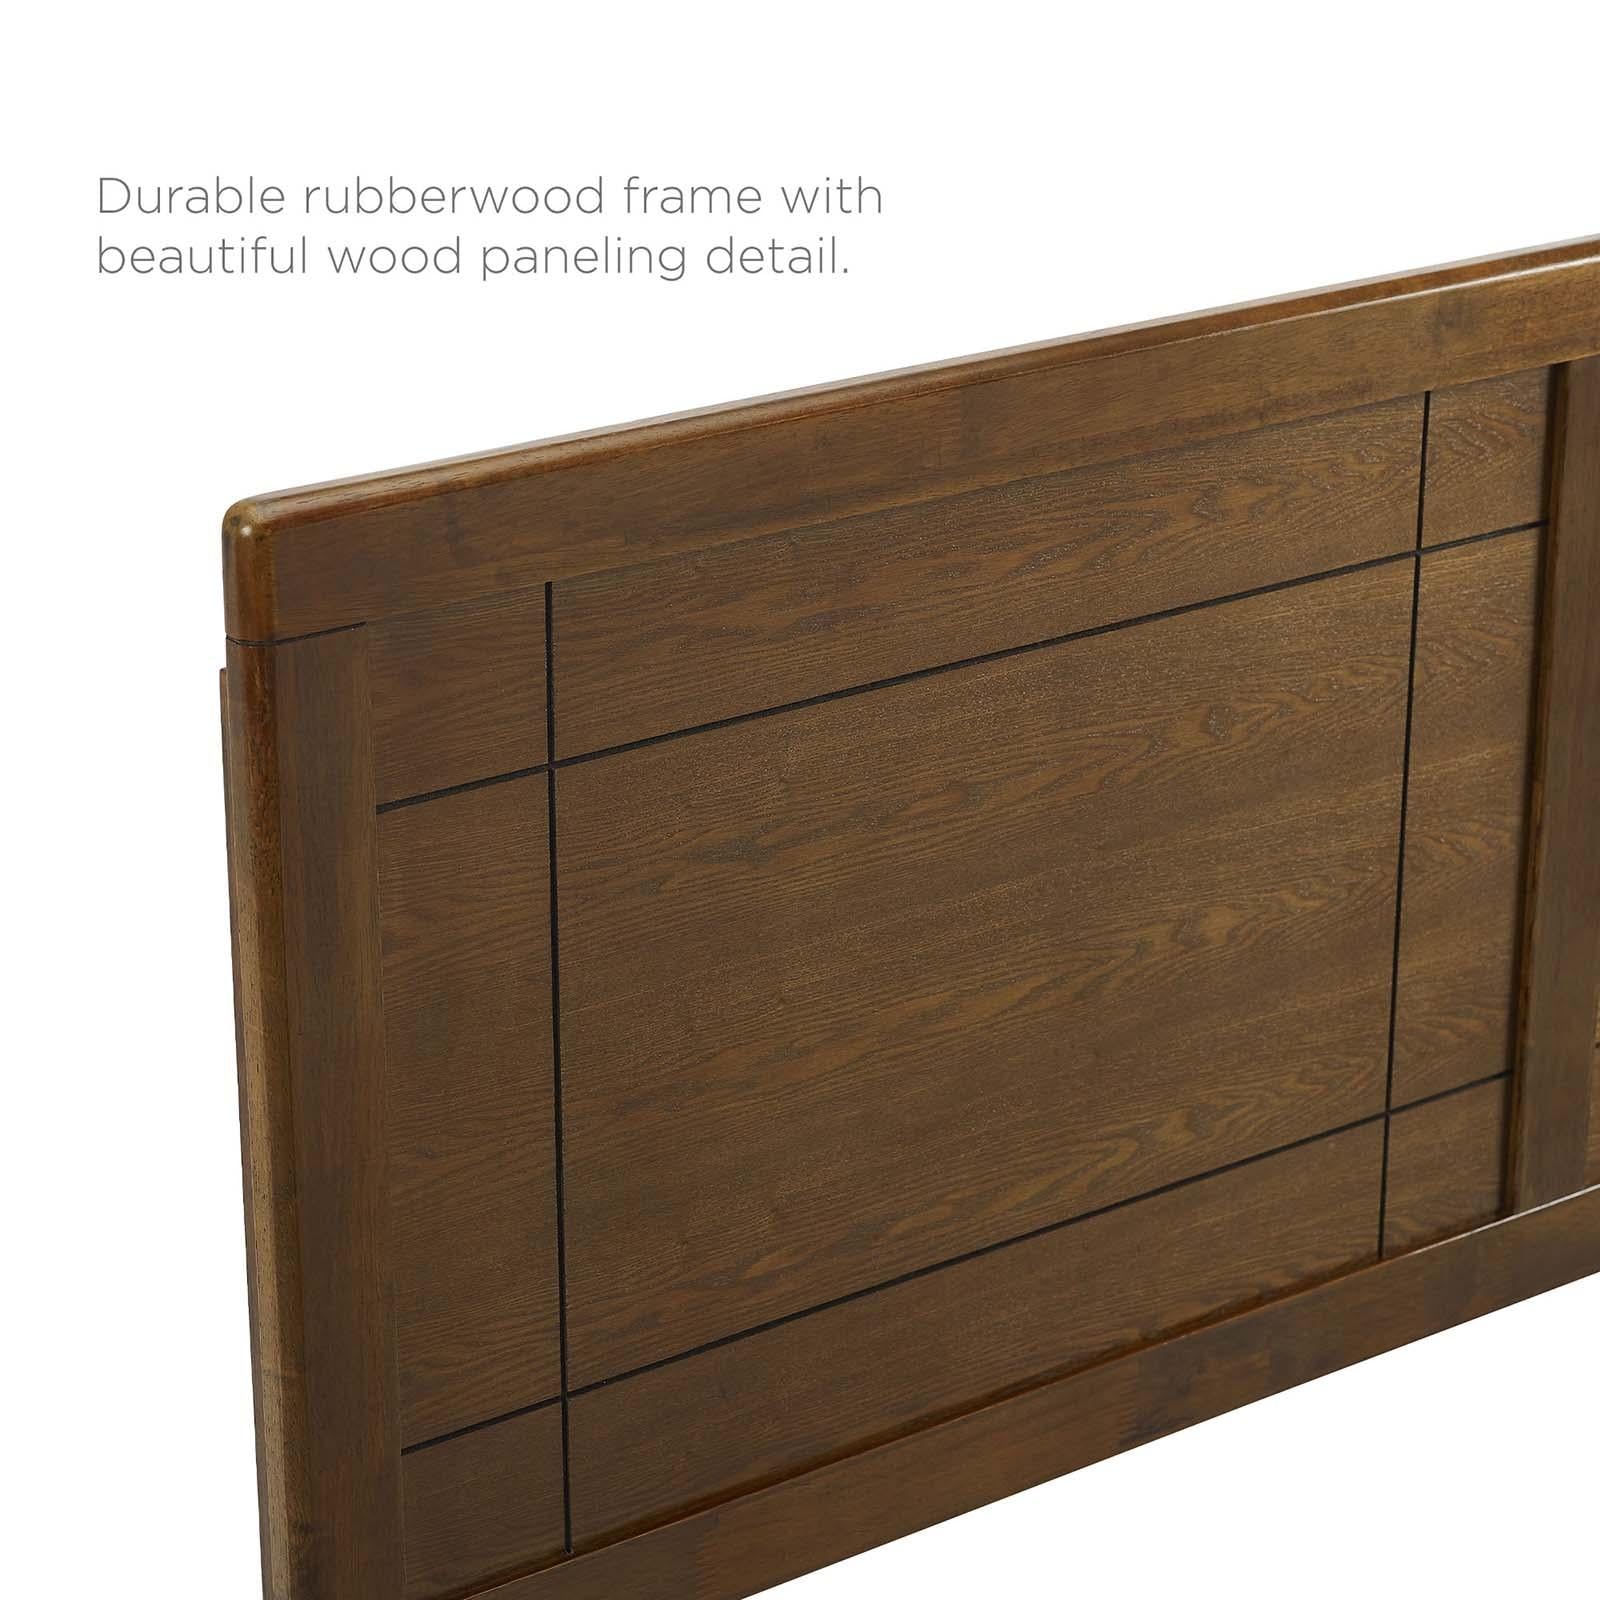 Modway Furniture Modern Marlee Queen Wood Platform Bed With Angular Frame - MOD-6381